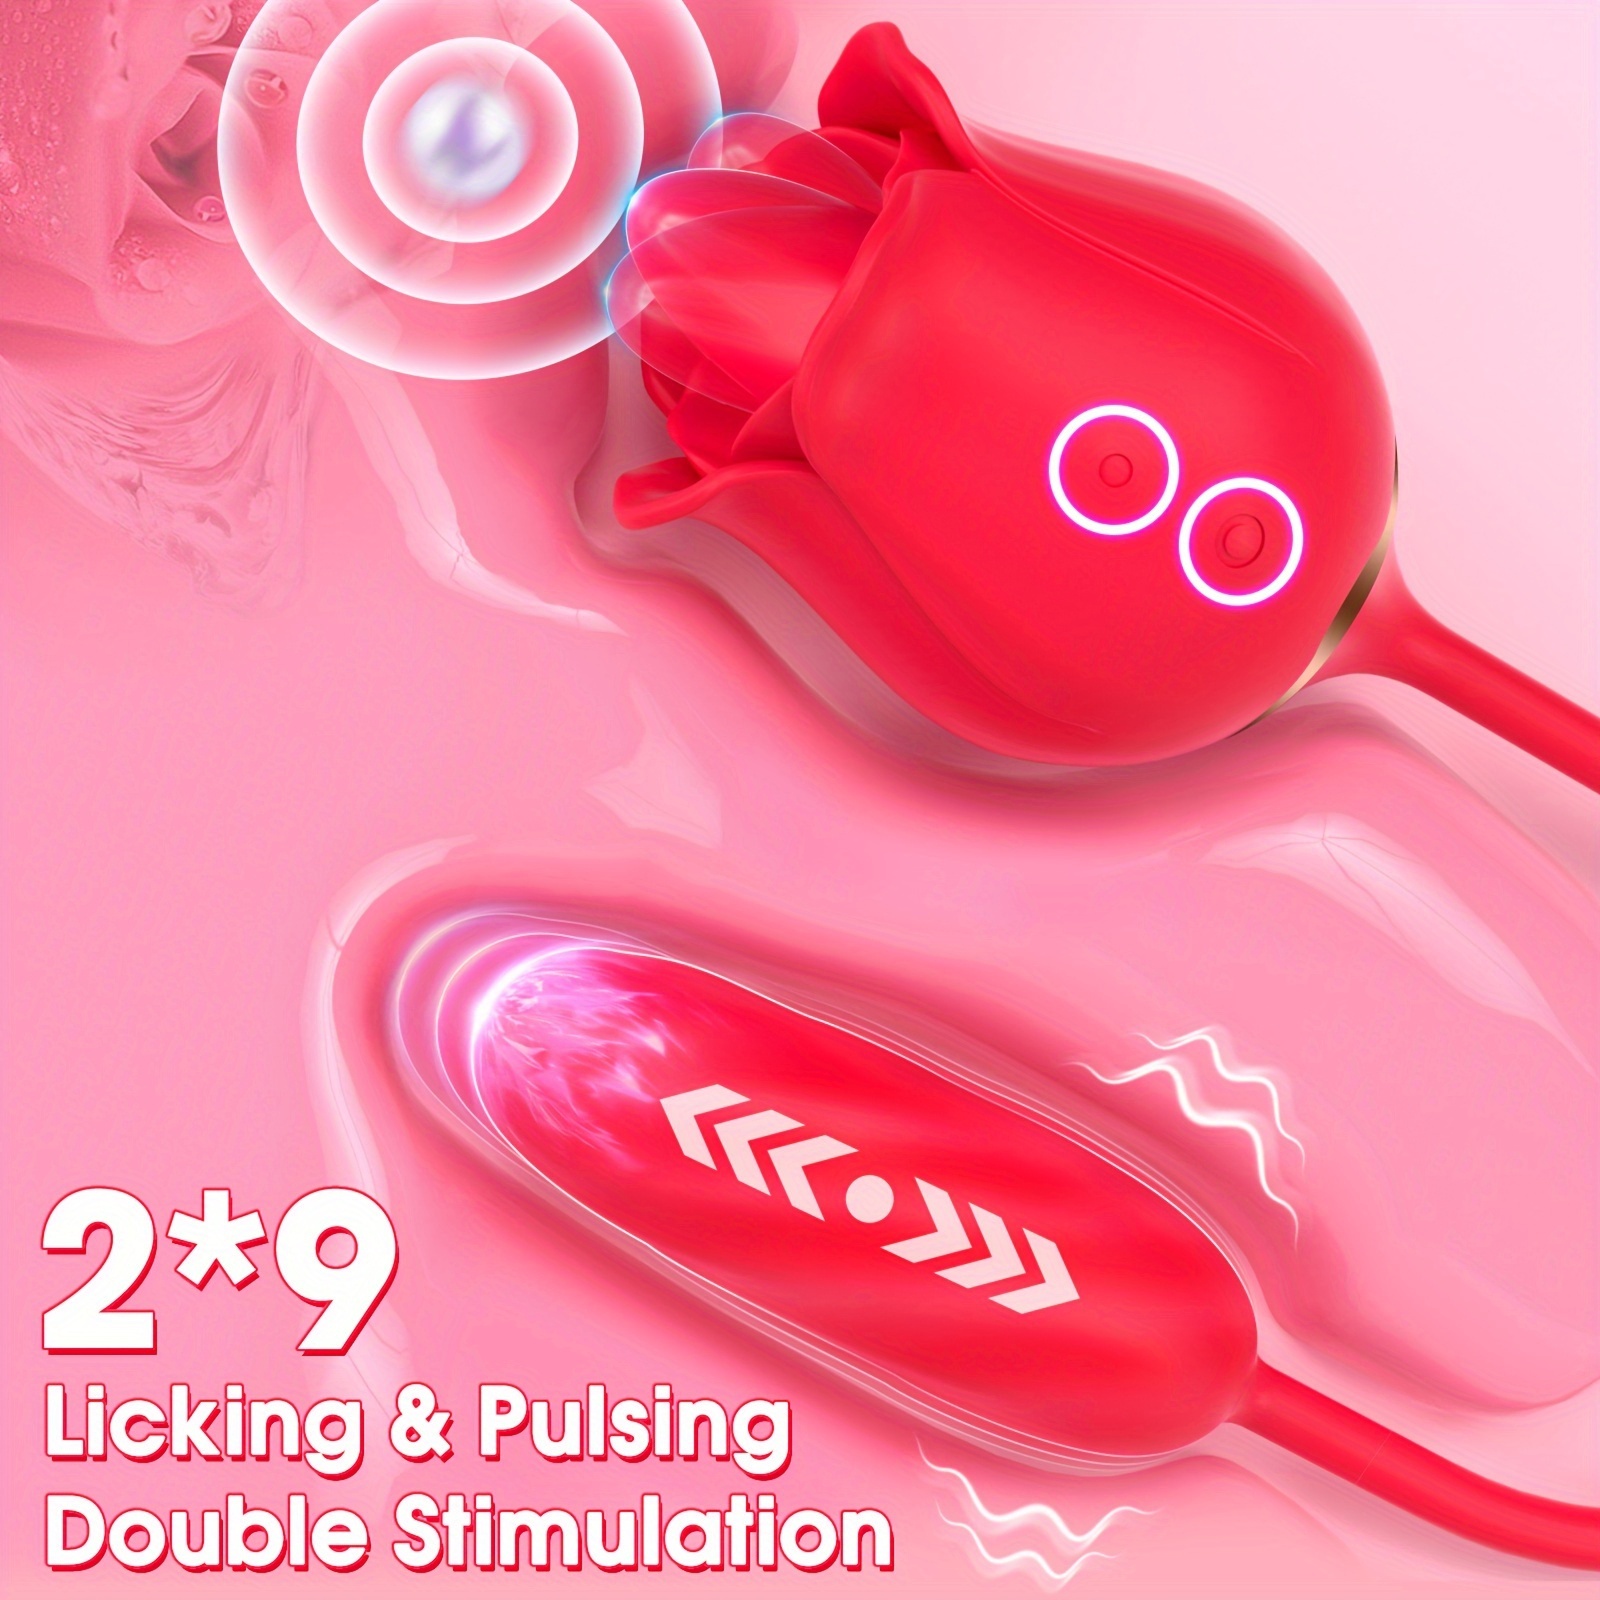 Clitoral Licking Rose Vibrator for Women, Sex Toys for Women, Tongue  Vibrator Rose Toy with 8 Licking & Vibration Modes, Tongue Licker G Spot  Vibrator